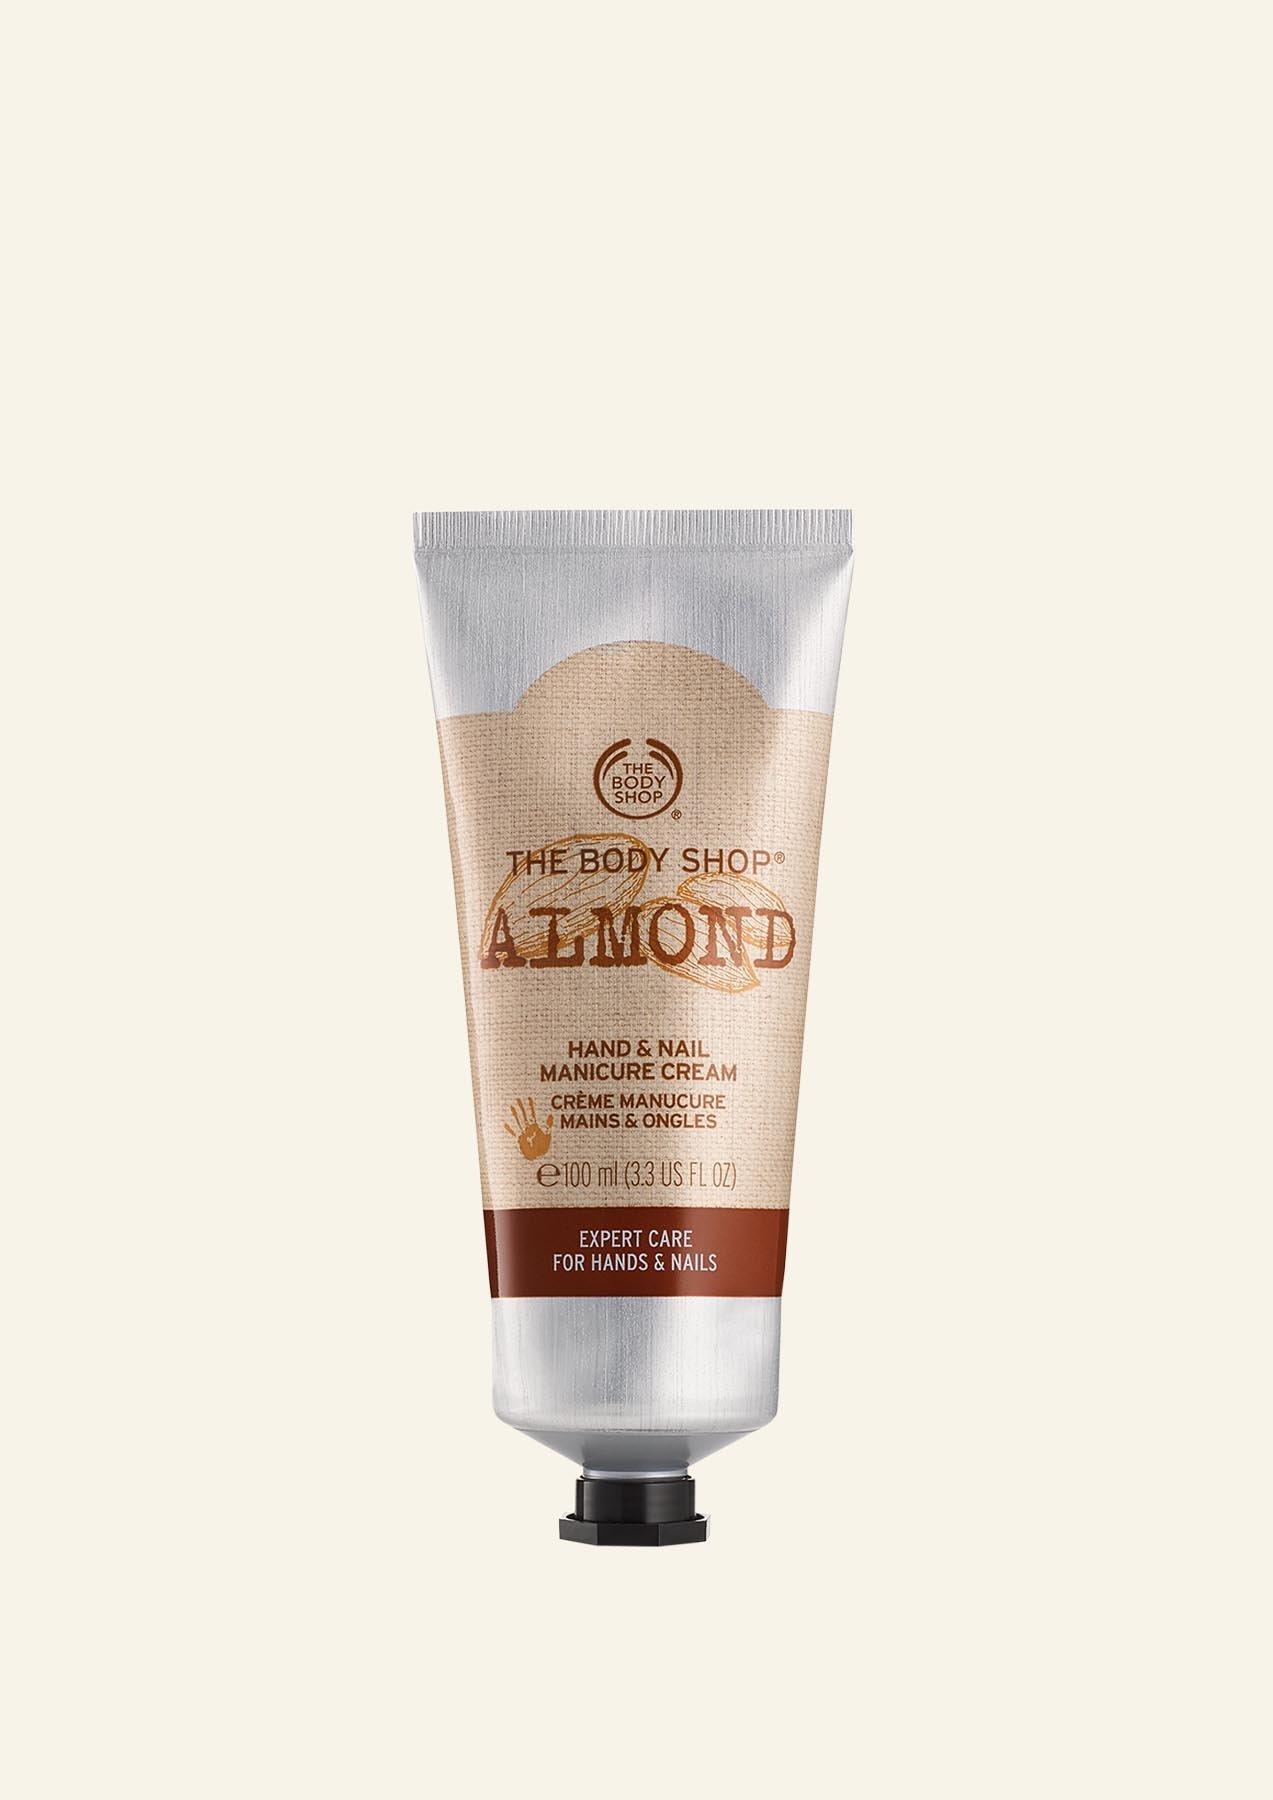 Dochter bewaker Oriëntatiepunt Almond Hand & Nail Manicure Cream | The Body Shop®